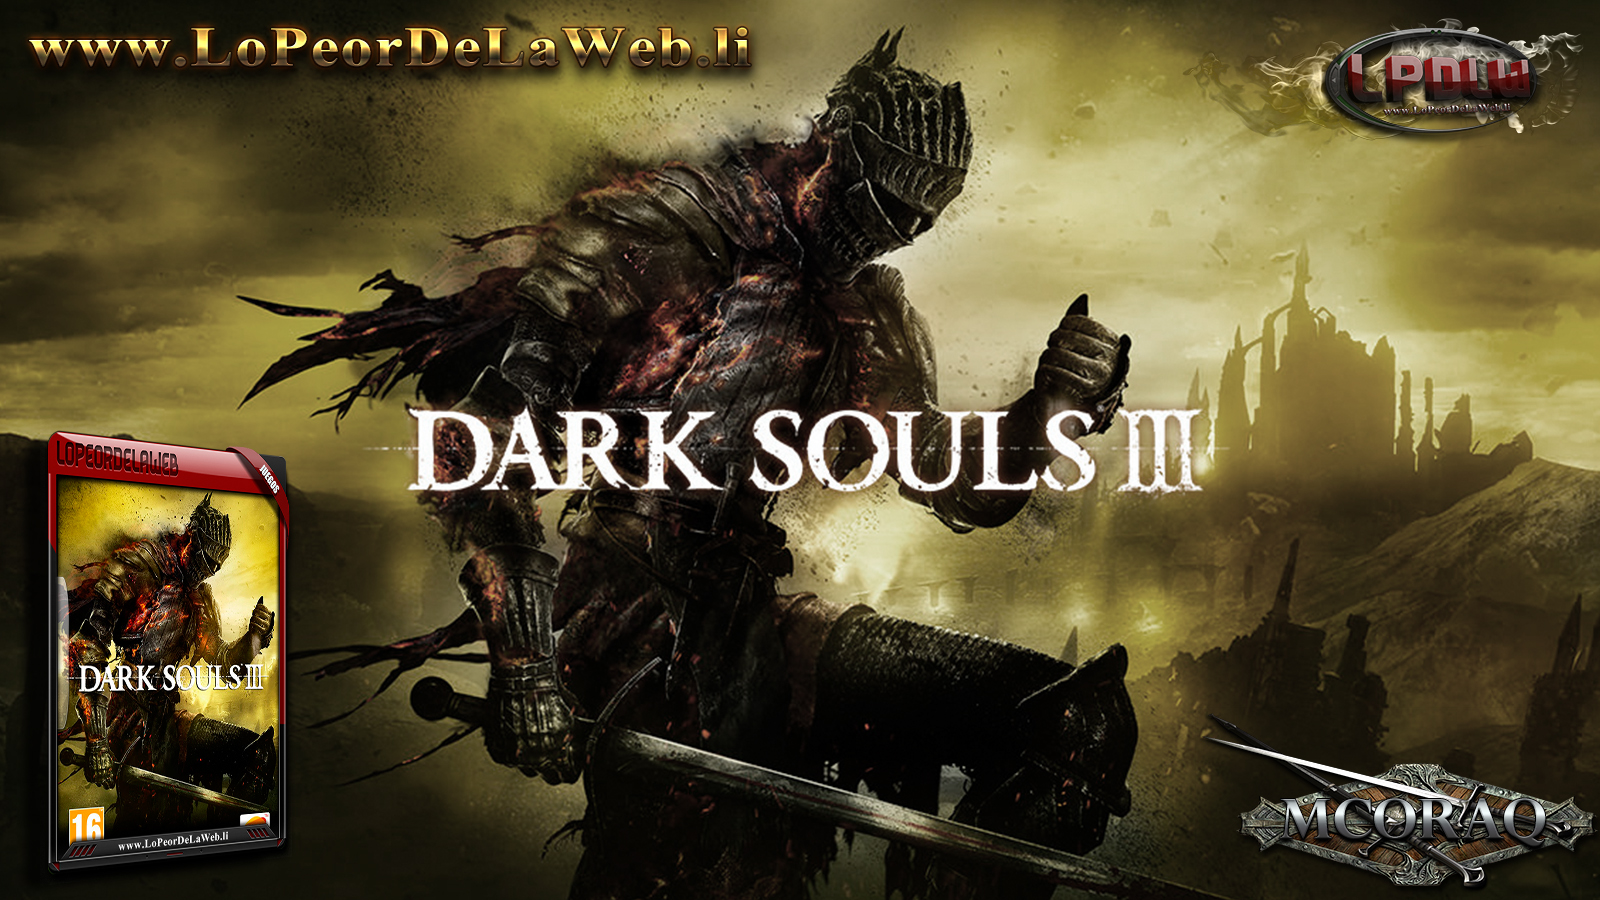 Dark Souls III Multilenguaje (Español) (PC-GAME)